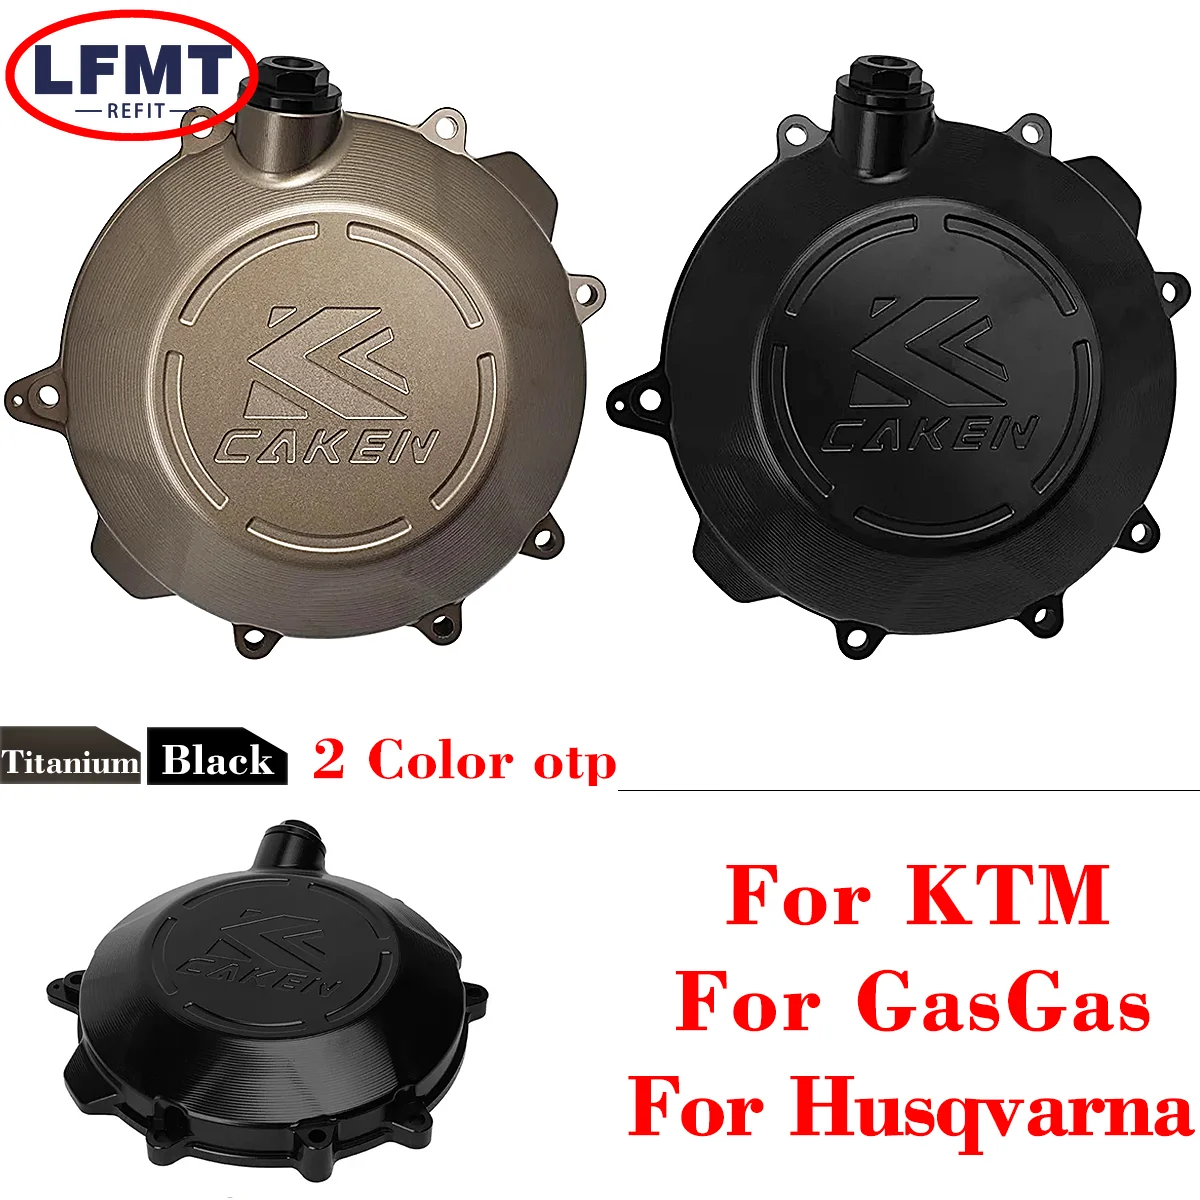 

For KTM EXC SX XC XC-W 250 300 TPI SIX DAYS For Husqvarna TC250 TE250i TE300i TX300i CNC Aluminium Clutch Guard Cover Protector